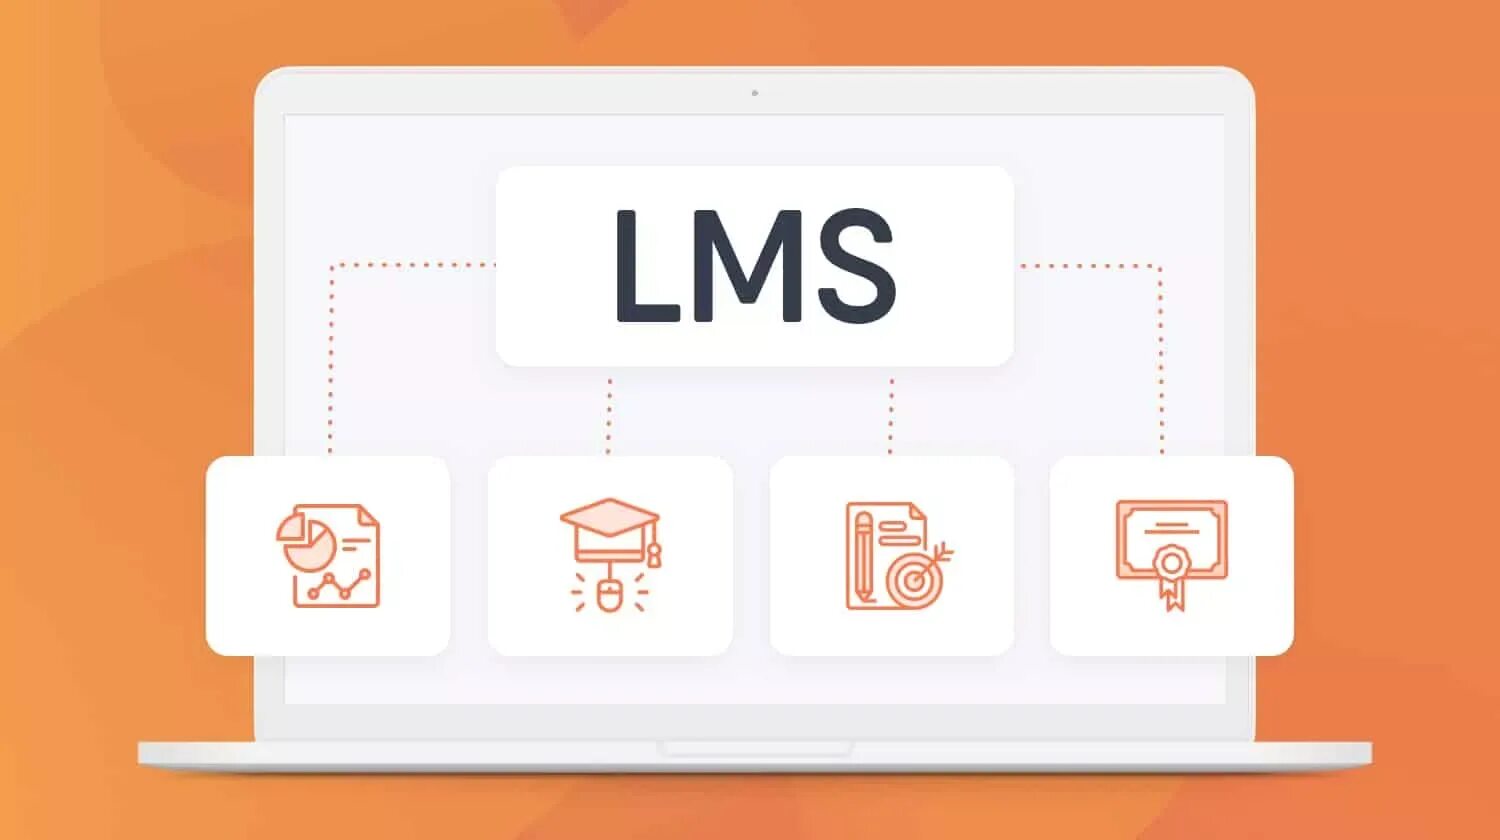 S lms ru. LMS система. LMS картинки. LMS система управления обучением. ЛМС.